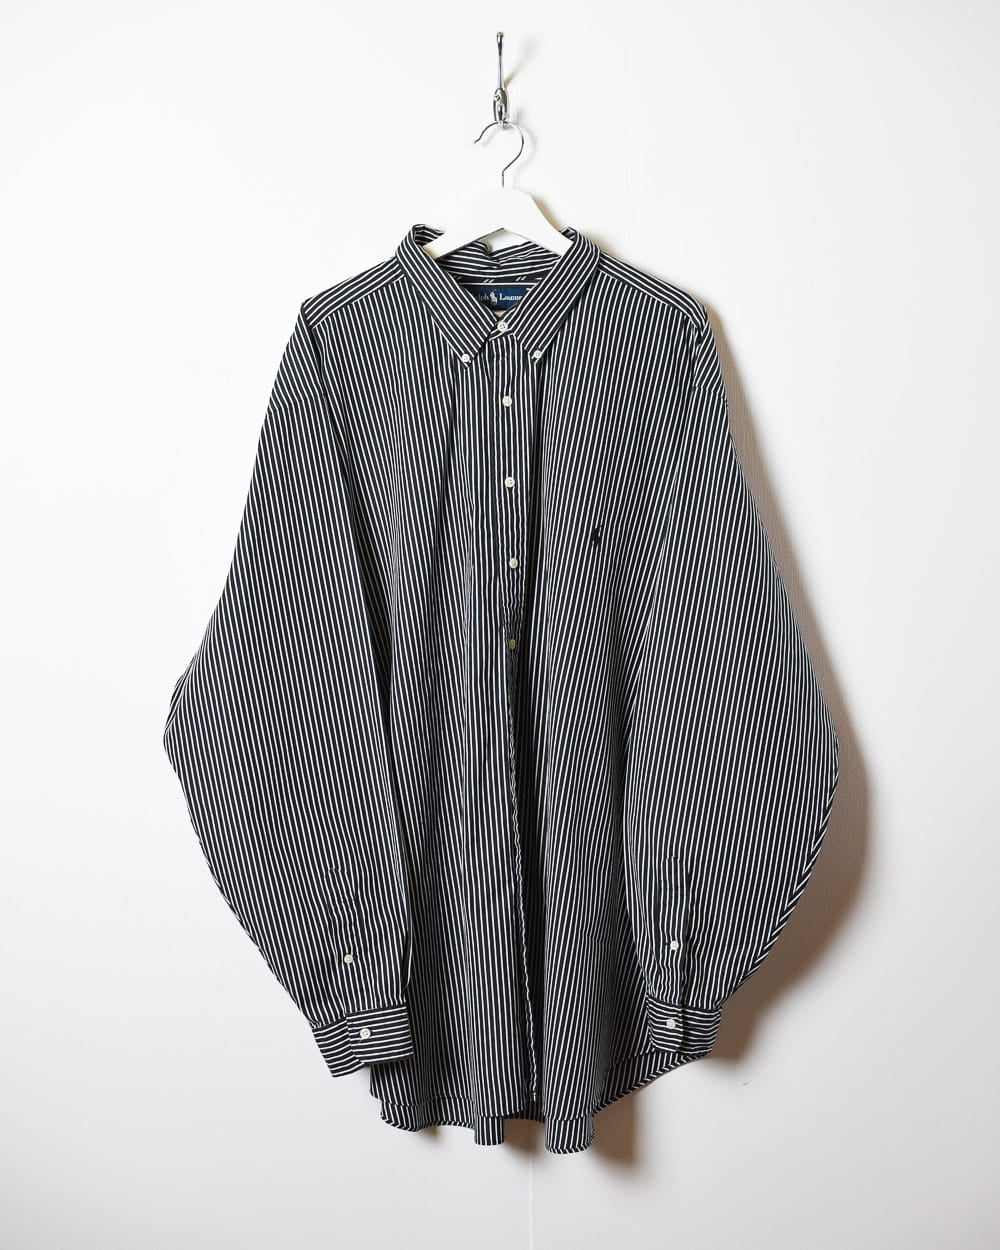 Black Polo Ralph Lauren Striped Shirt - XXXX-Large